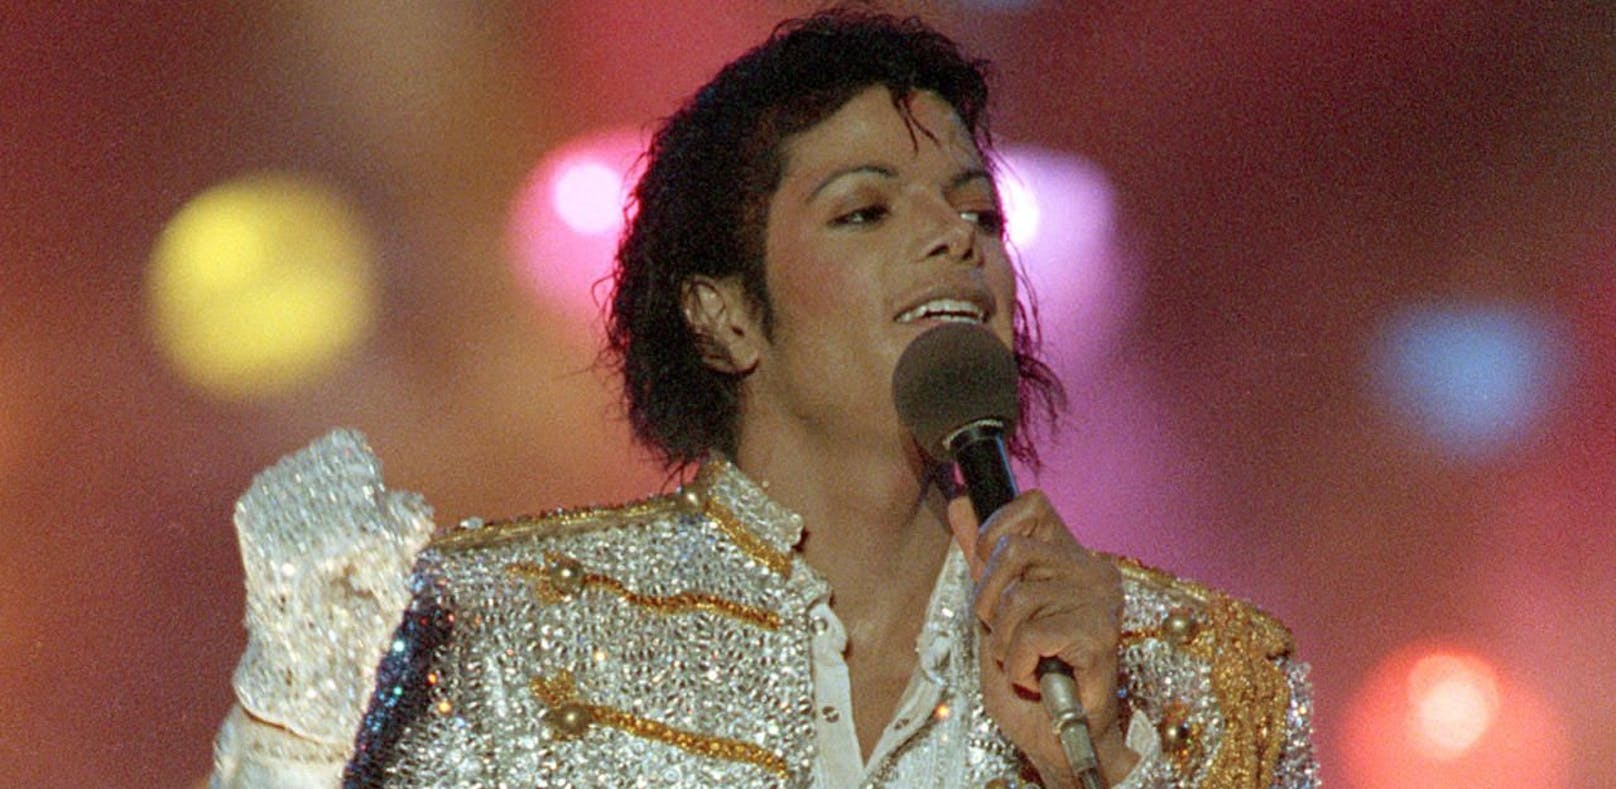 Musical über Michael Jacksons Handschuh geplant